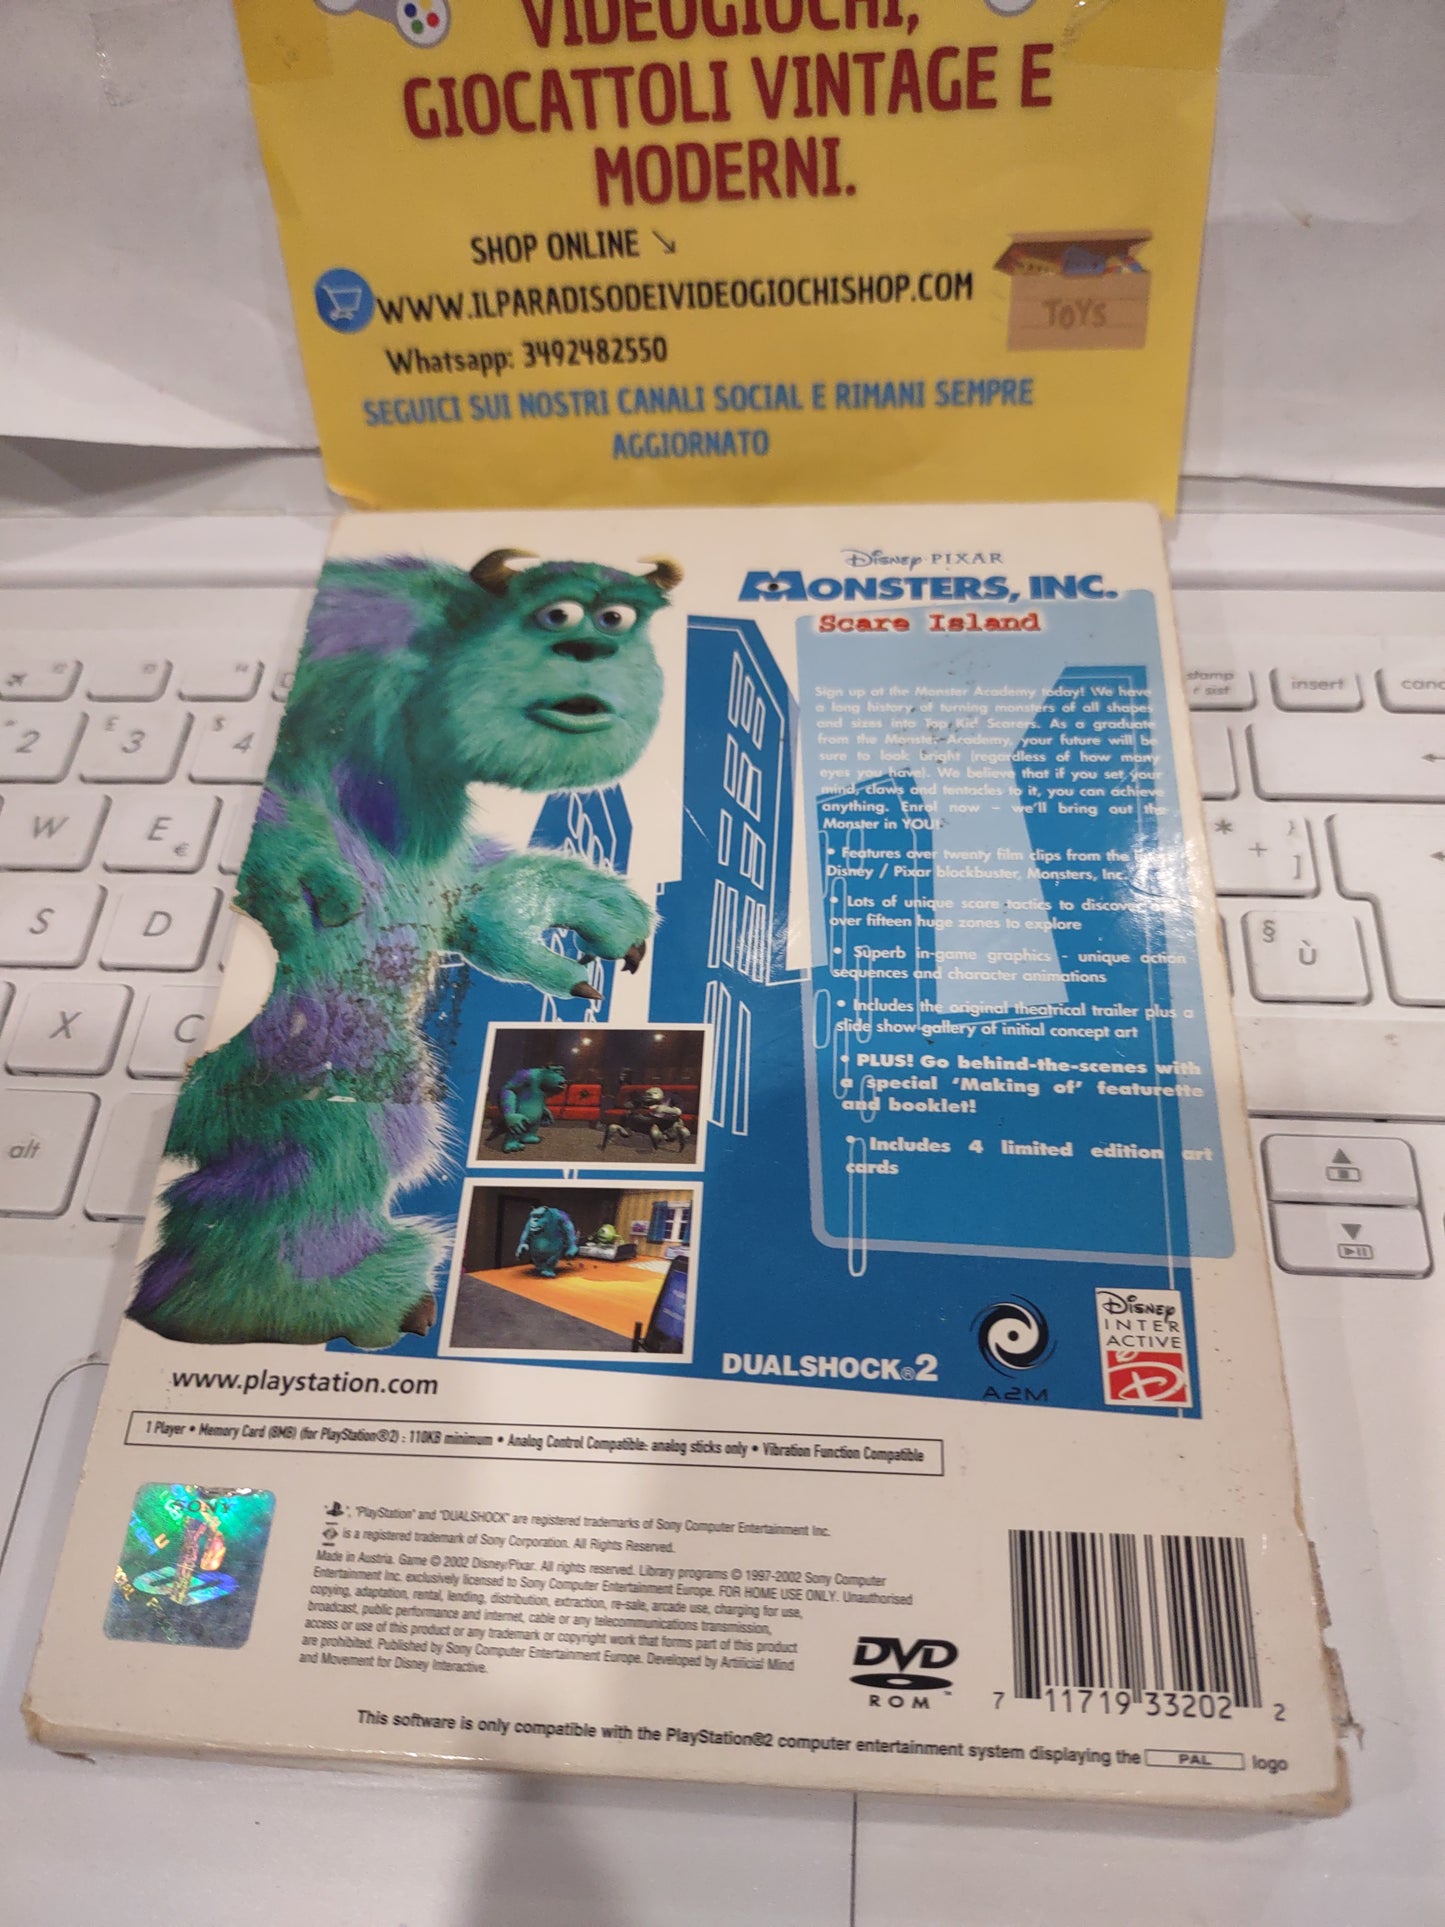 Gioco PlayStation PS2 Disney Pixar Monsters scarpe Island Limited edition